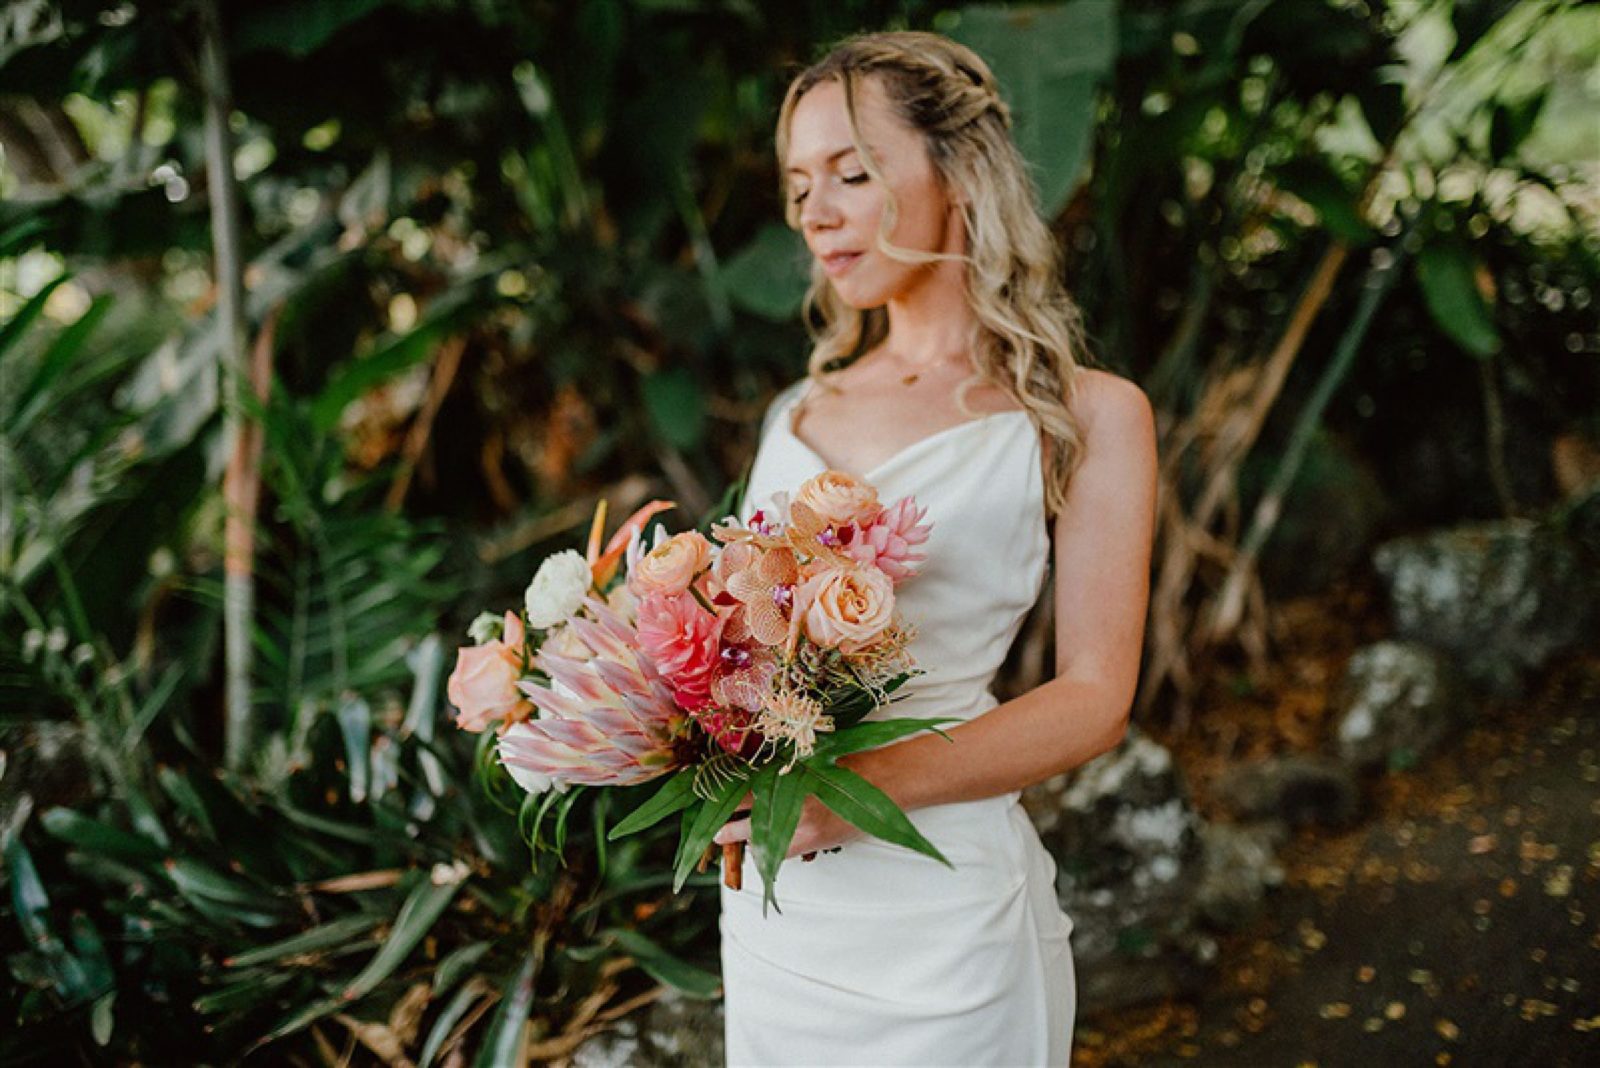 Dreamy Tropical Wedding Inspiration: Decor, Florals, & More